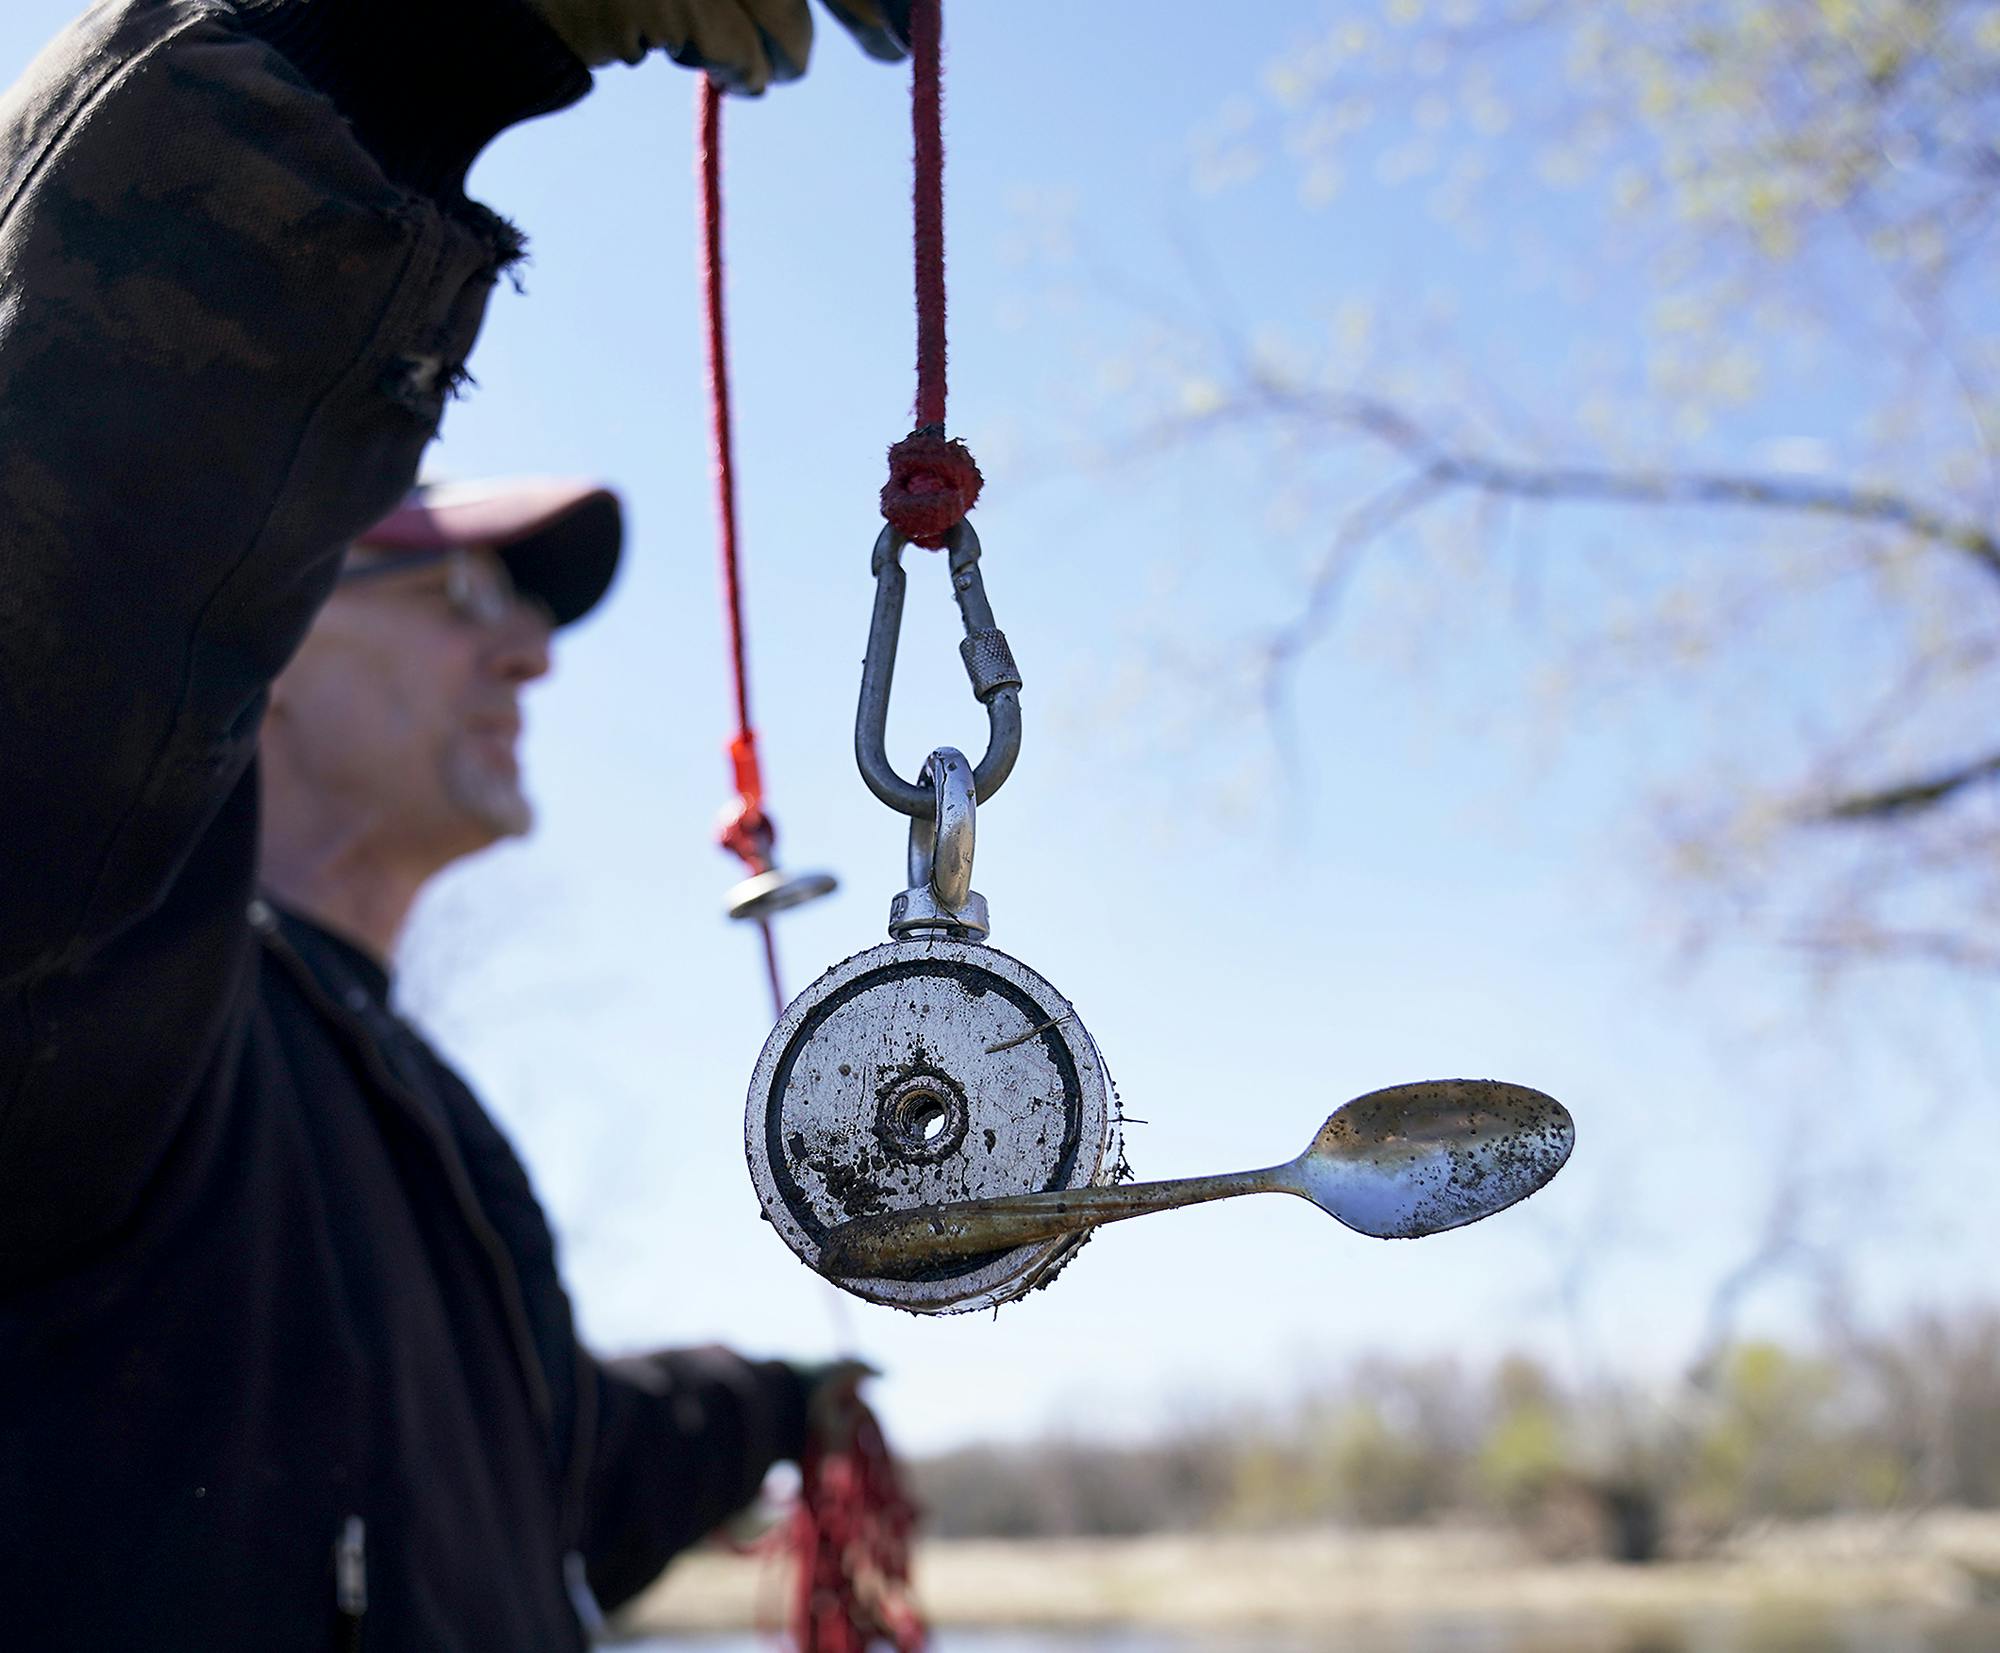 Minnesota's magnet fishers seek sunken treasure, be it antique tools